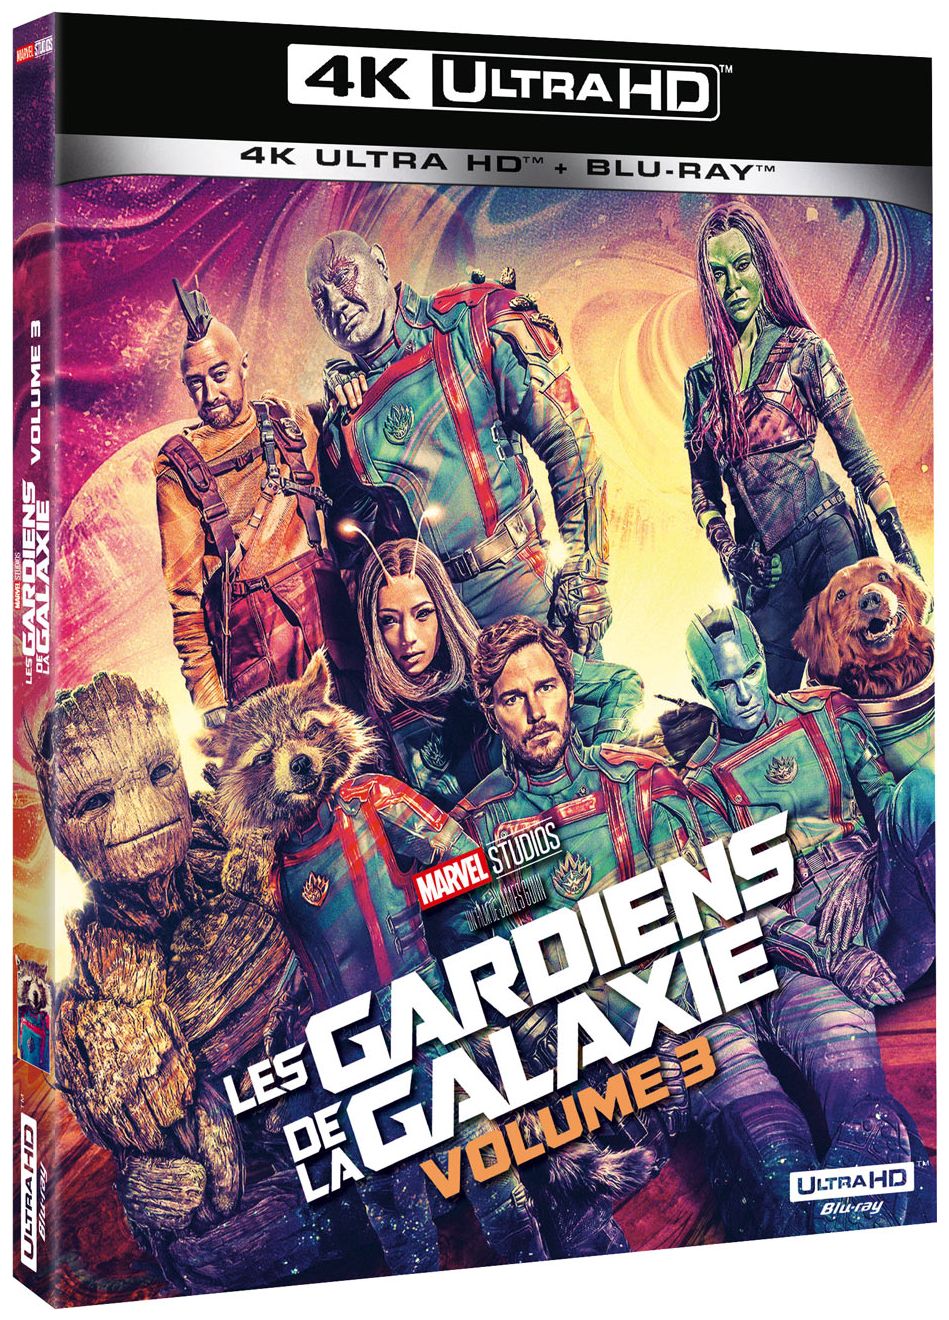 Les gardiens de la galaxie vol 3 [DVD/Blu-ray/4K UHD à la location]